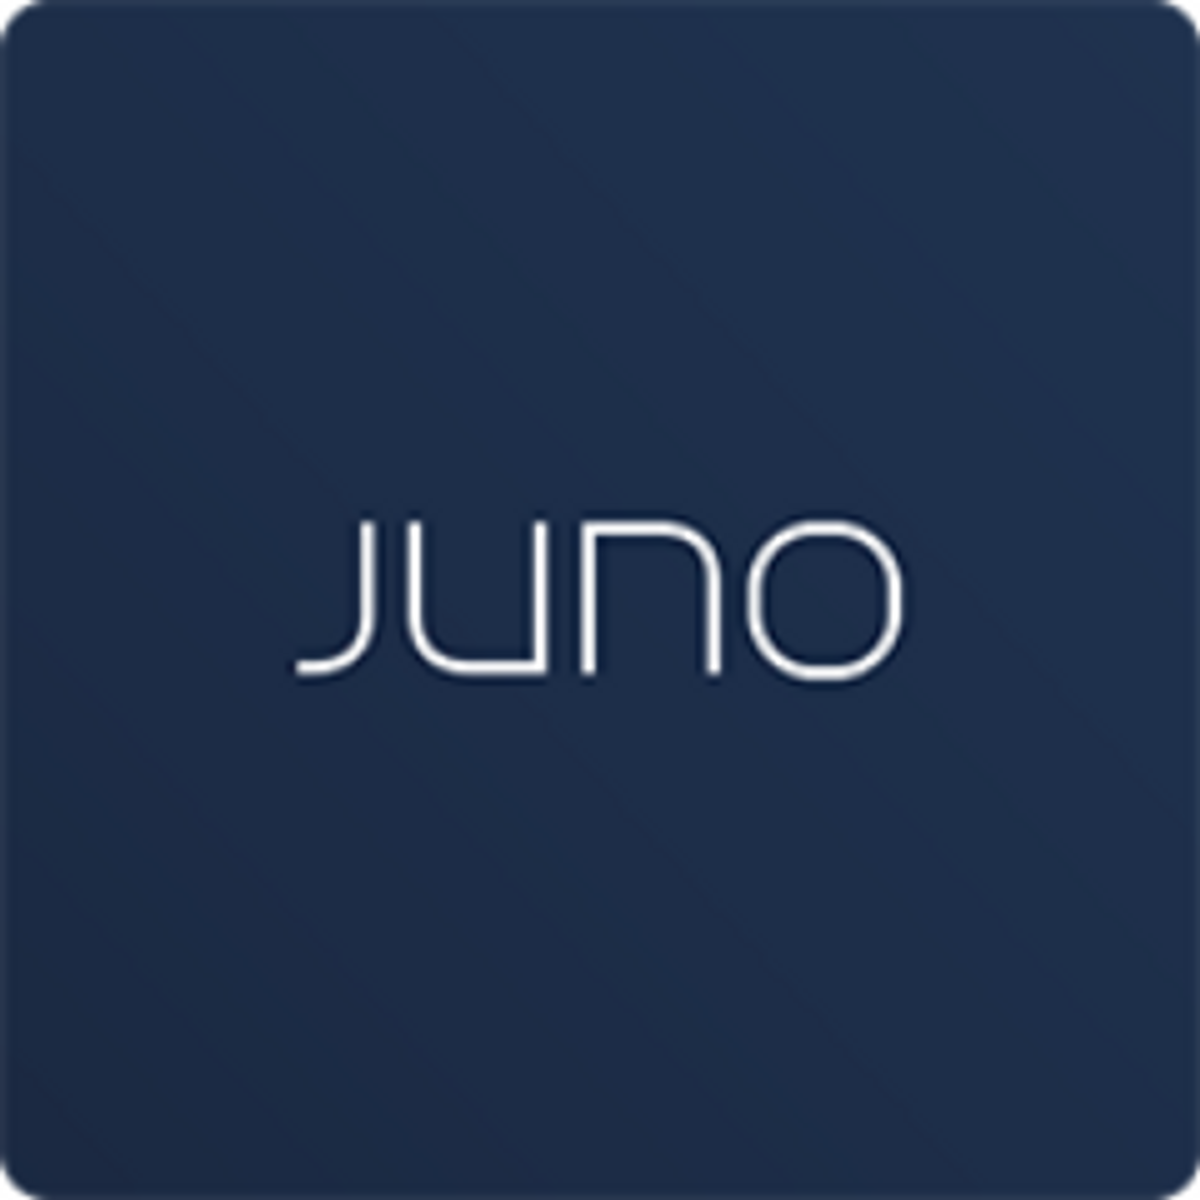 Juno: NYC's New Uber